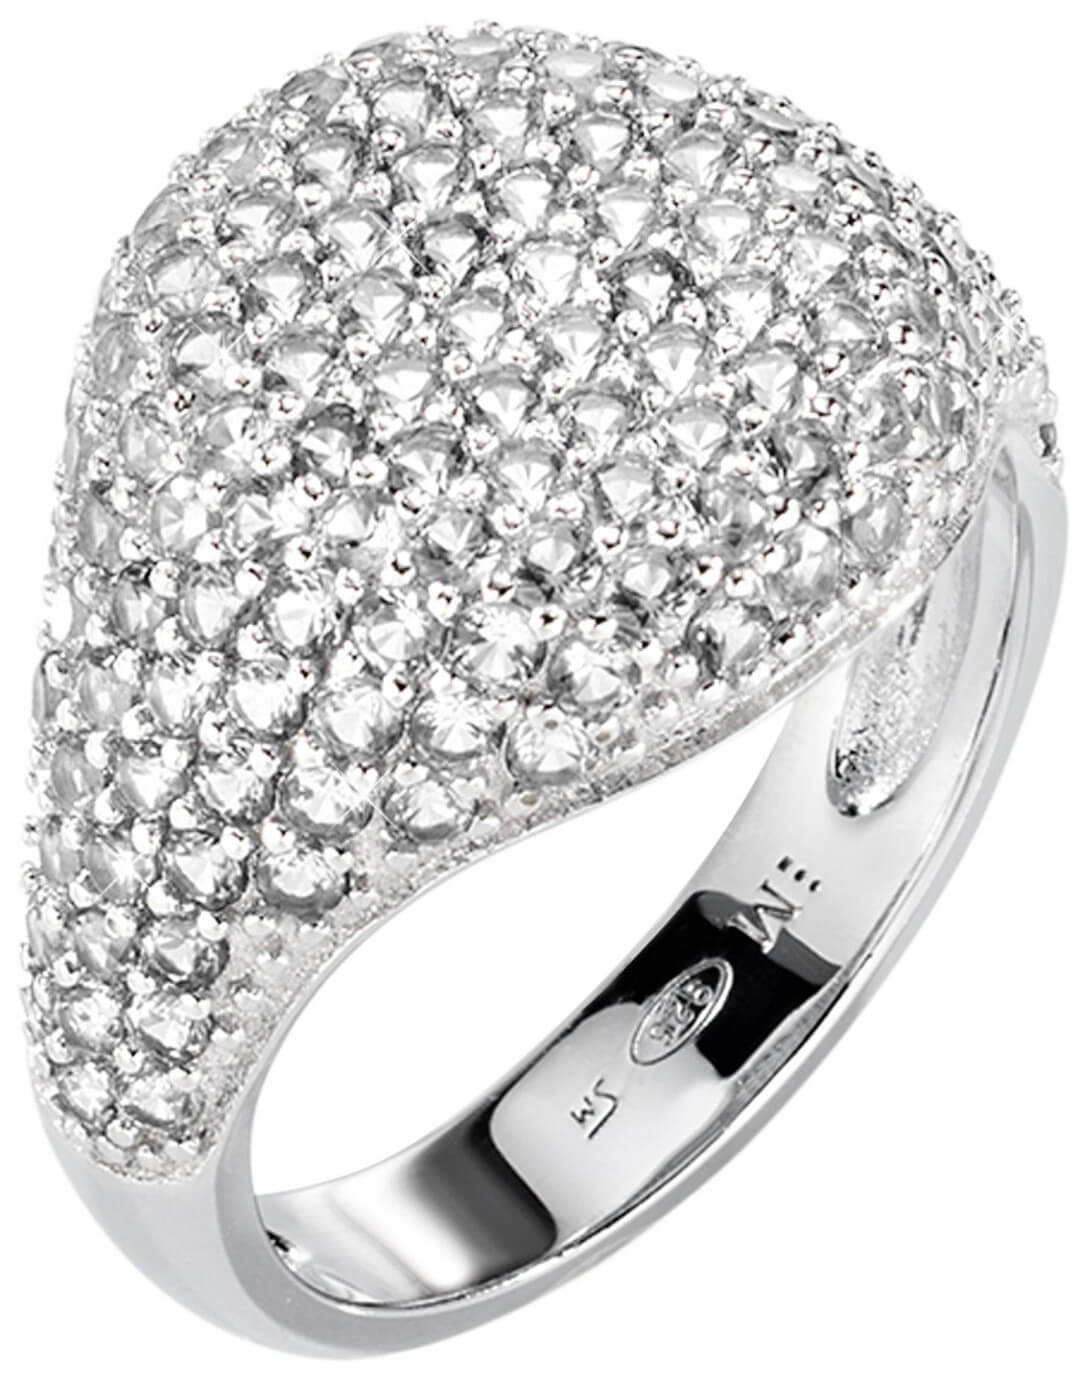 Morellato Luxusní třpytivý prsten ze stříbra Tesori SAIW65 58 mm